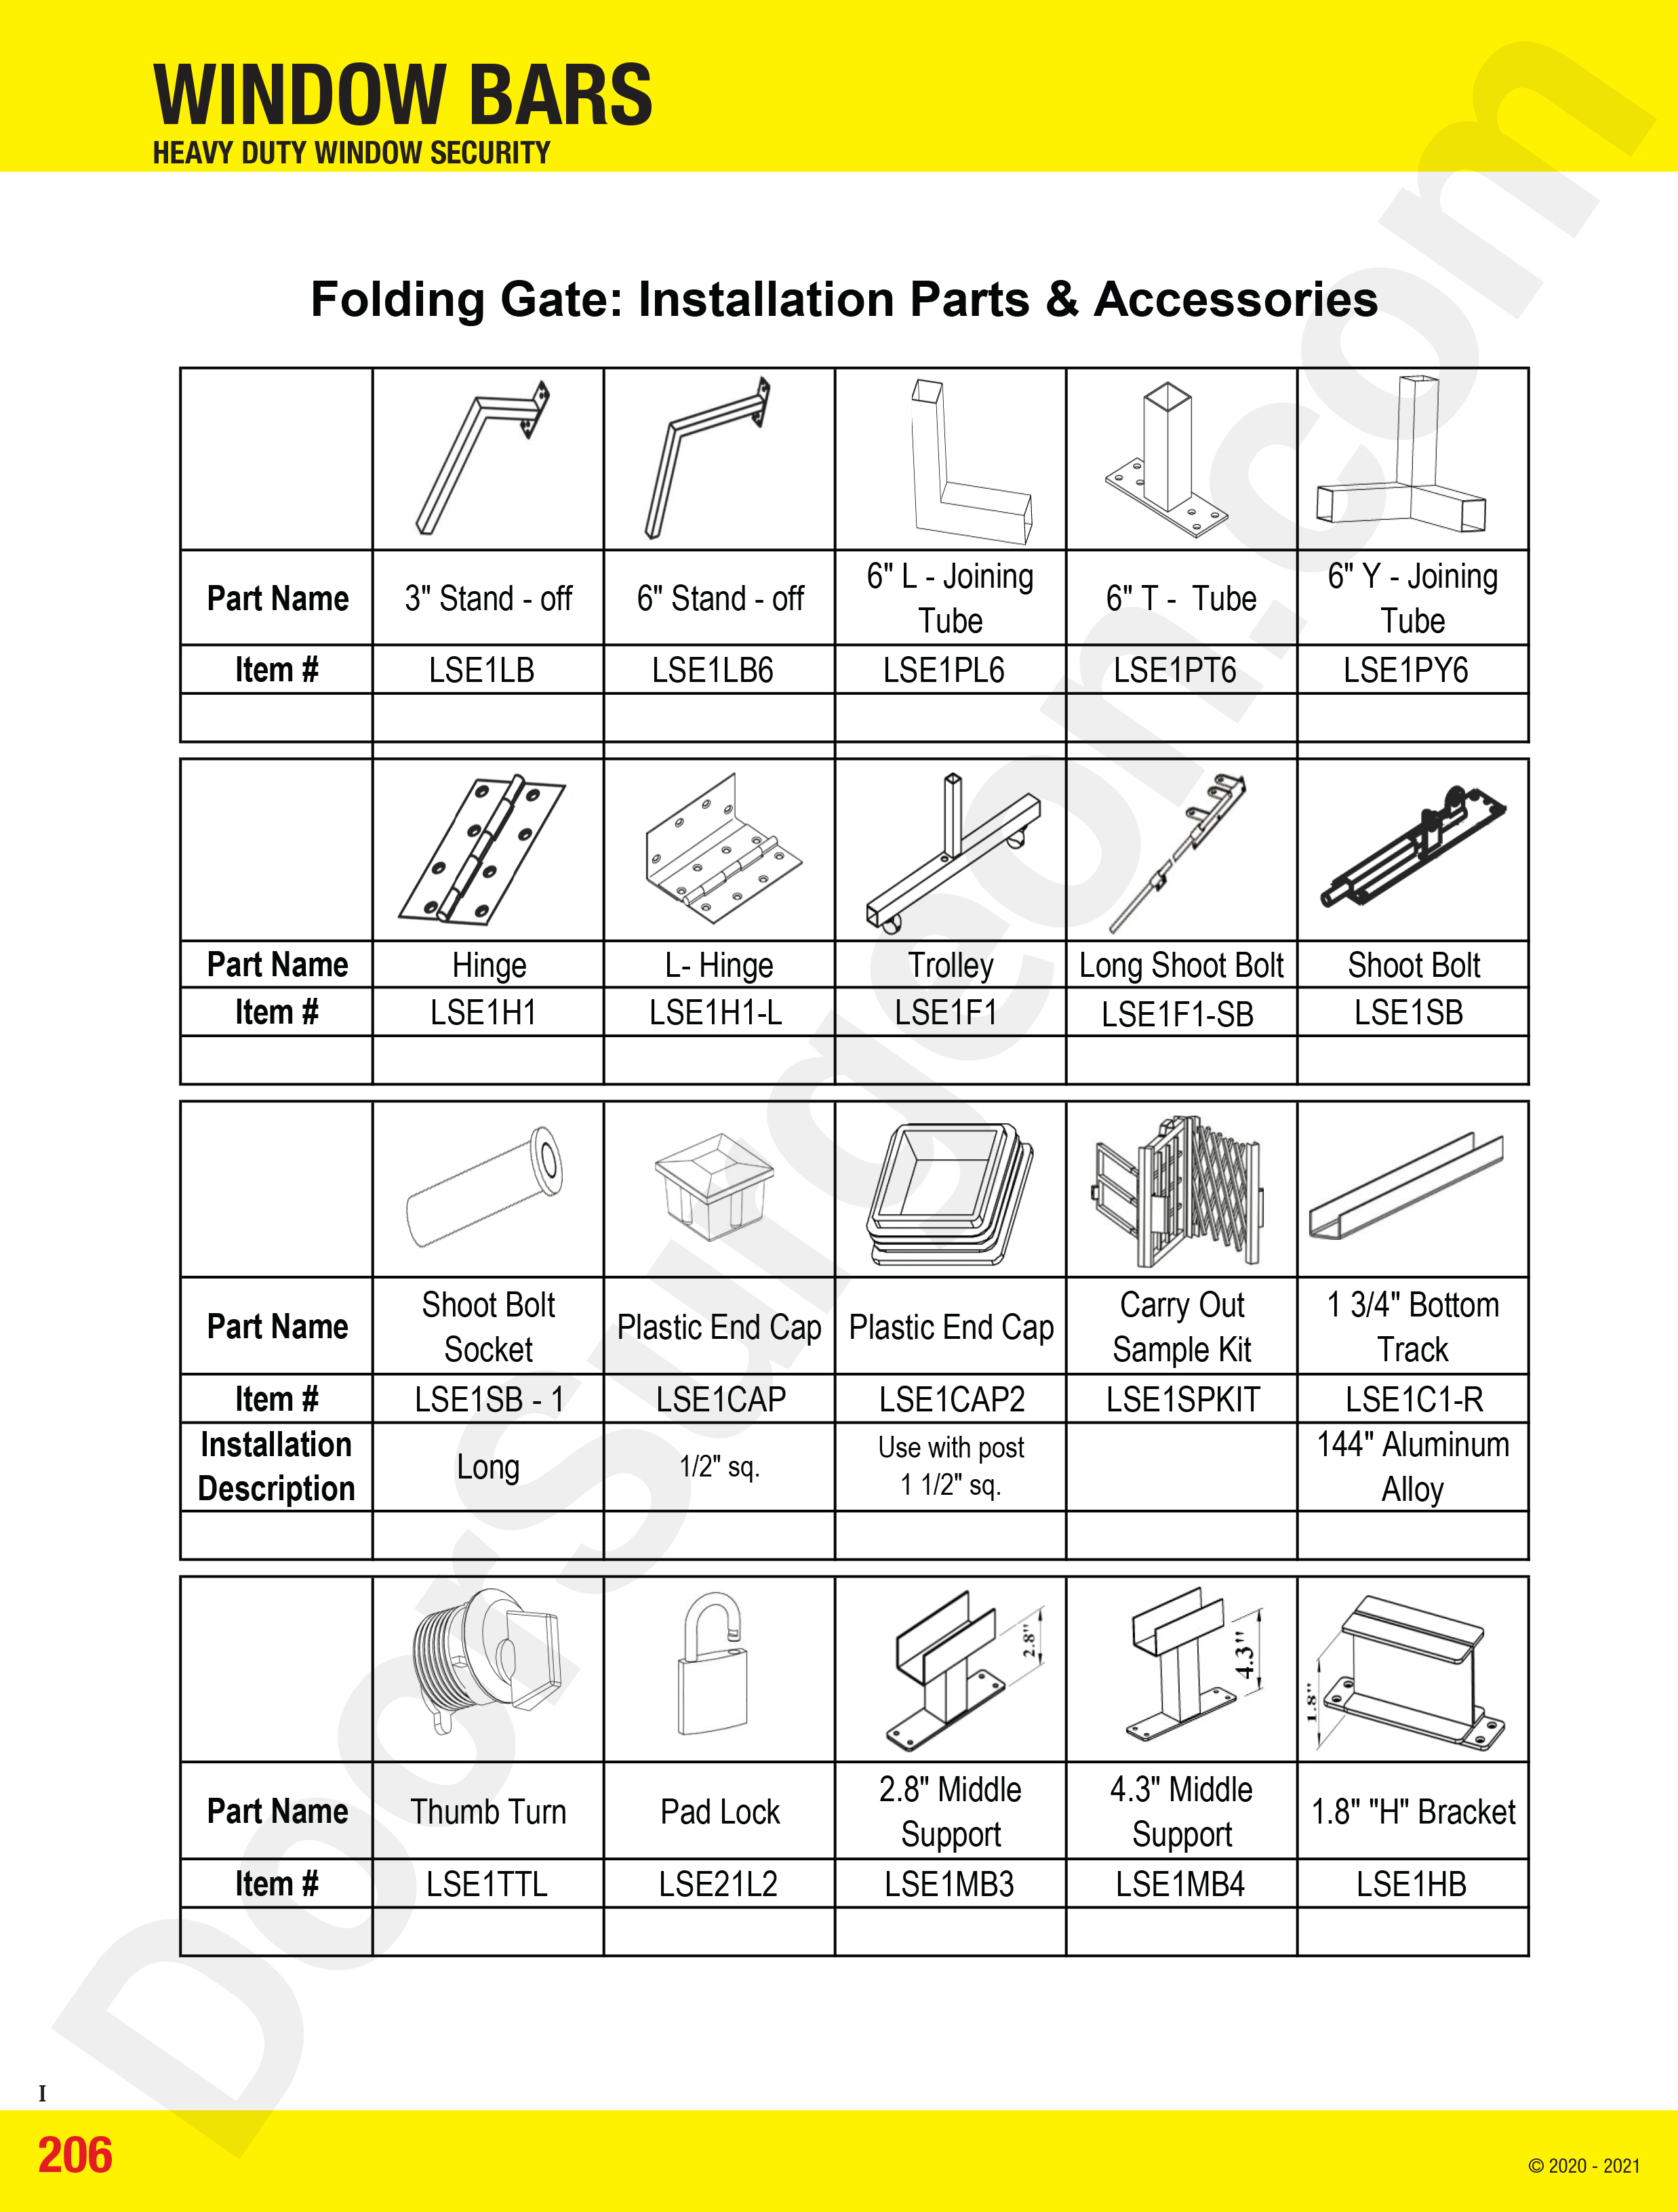 Stony Plain Door Surgeon folding gates installation parts and accessories.